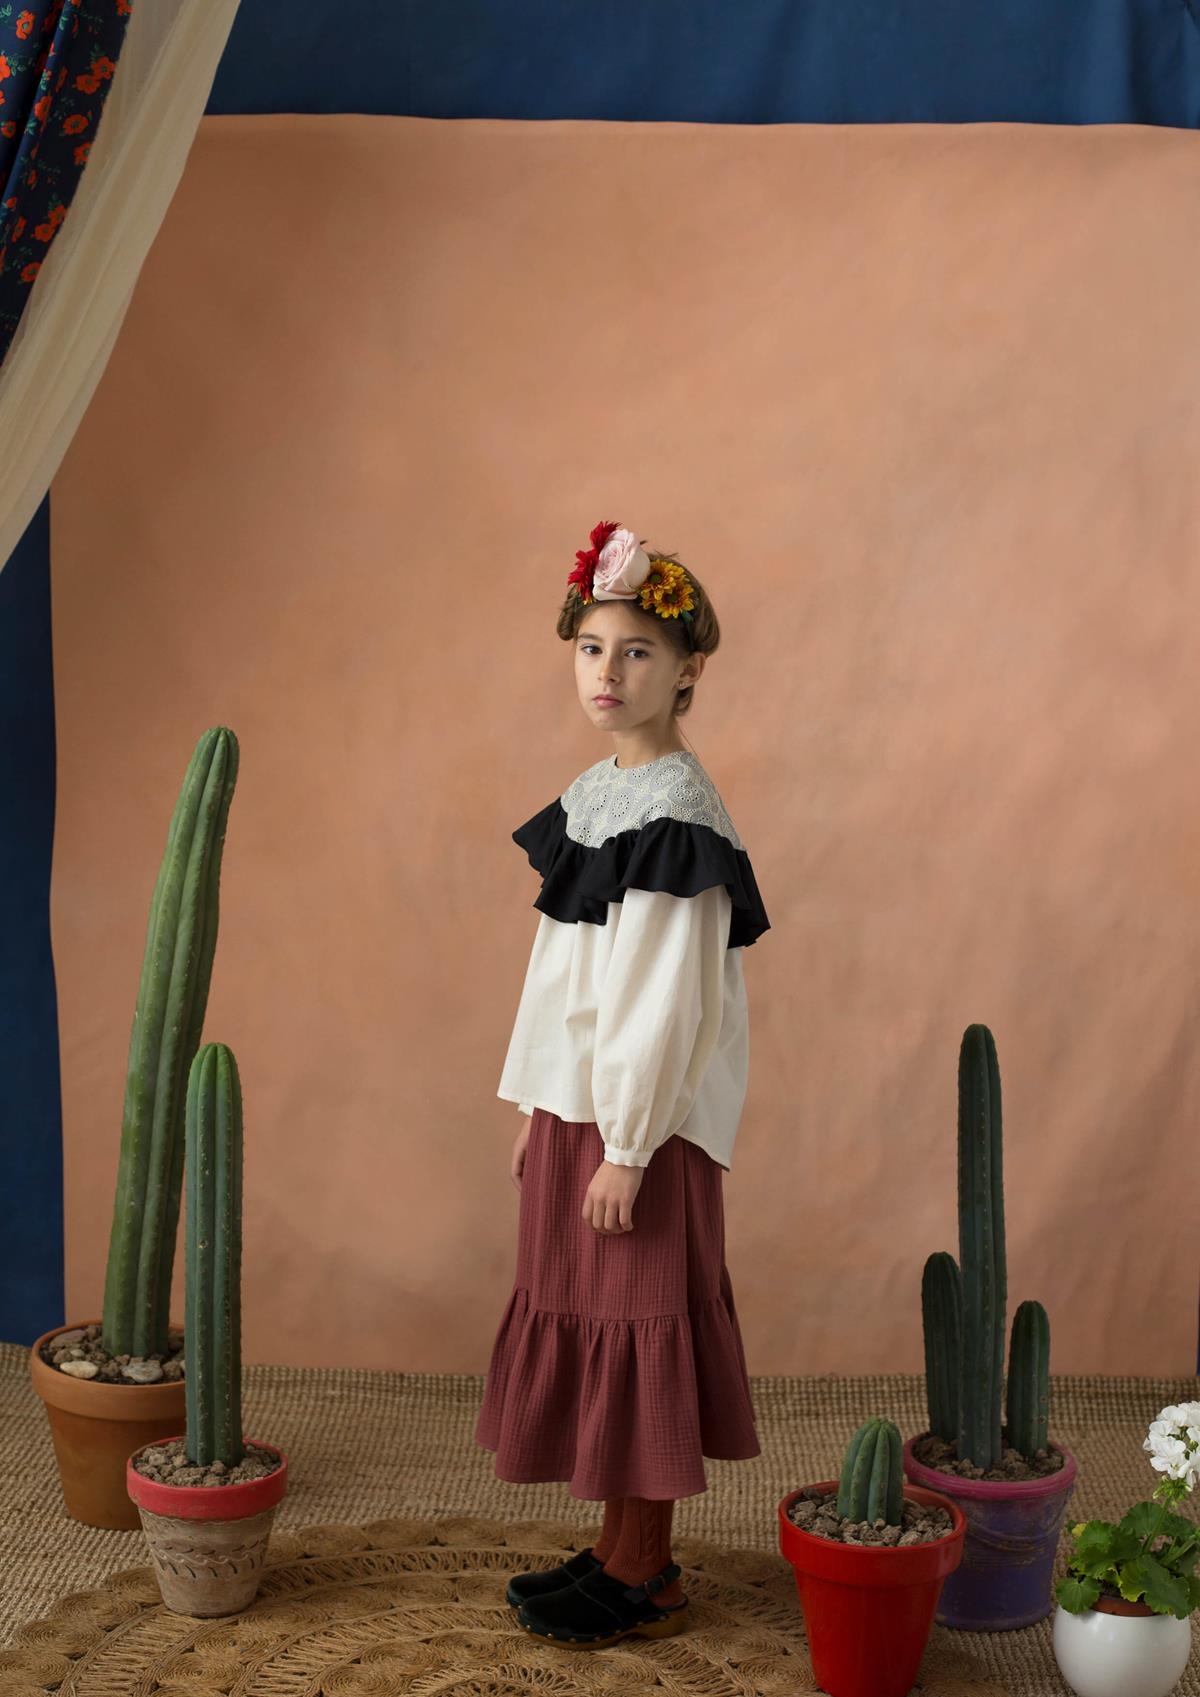 Mod.14.2 Earth tone Mexican skirt | AW19.20.Mod.14.2 Earth tone Mexican skirt | 1